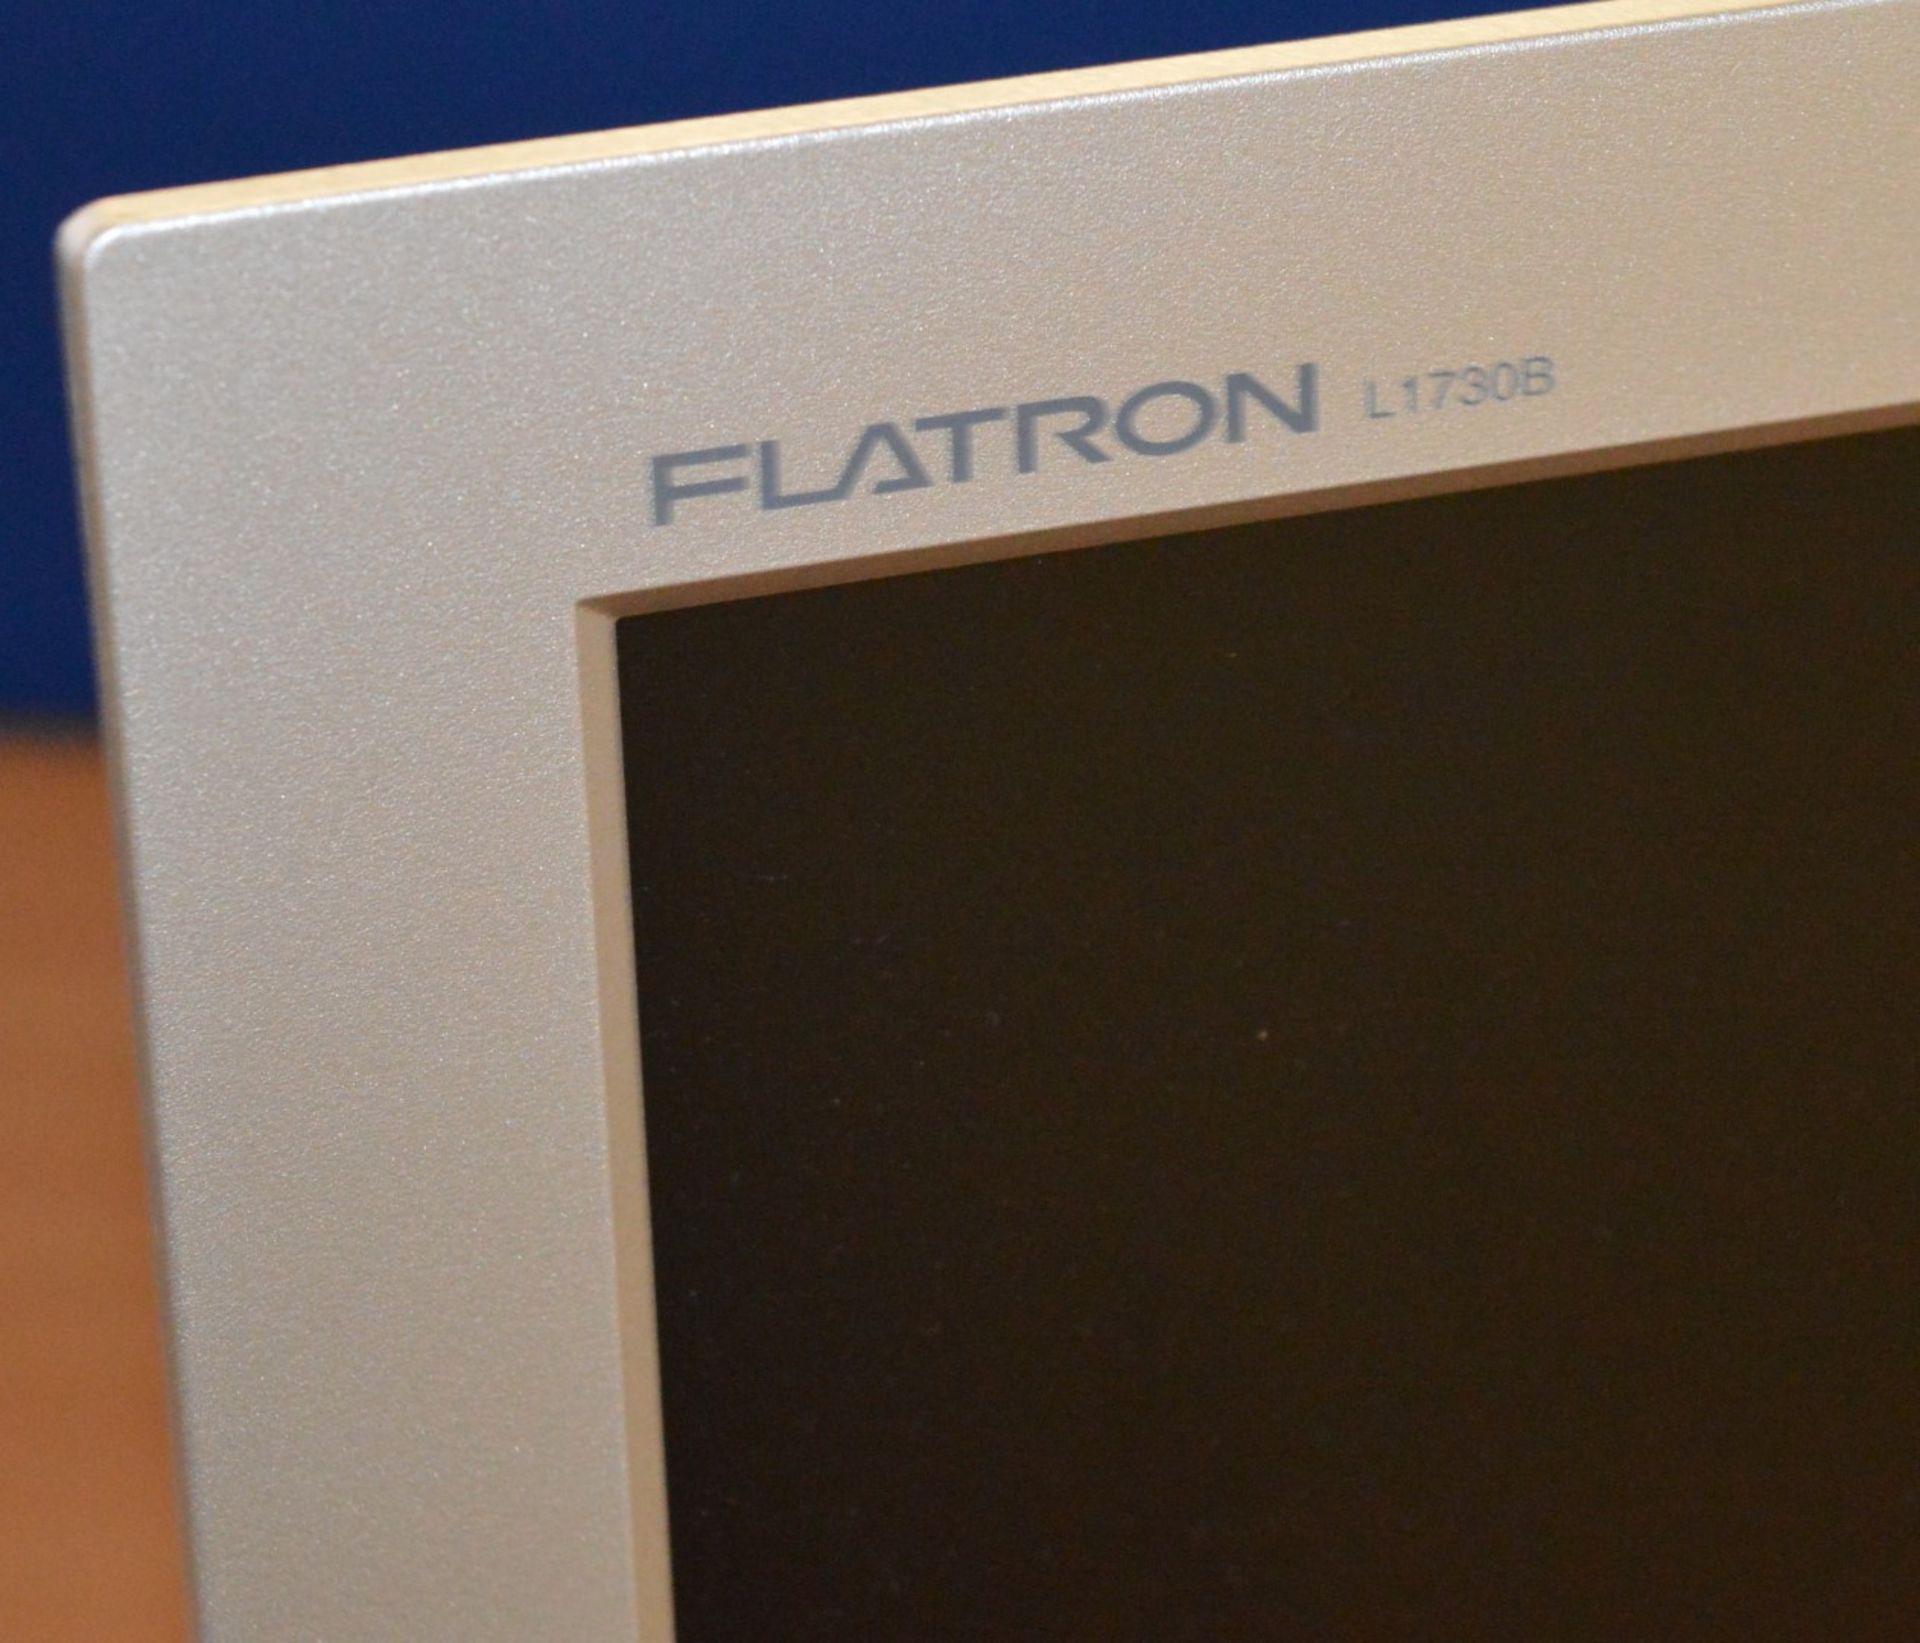 1 x LG Flatron L1730B Flatscreen TFT  Monitor - 17 Inch Screen Size - 1280 x 1024 Native - Image 2 of 4